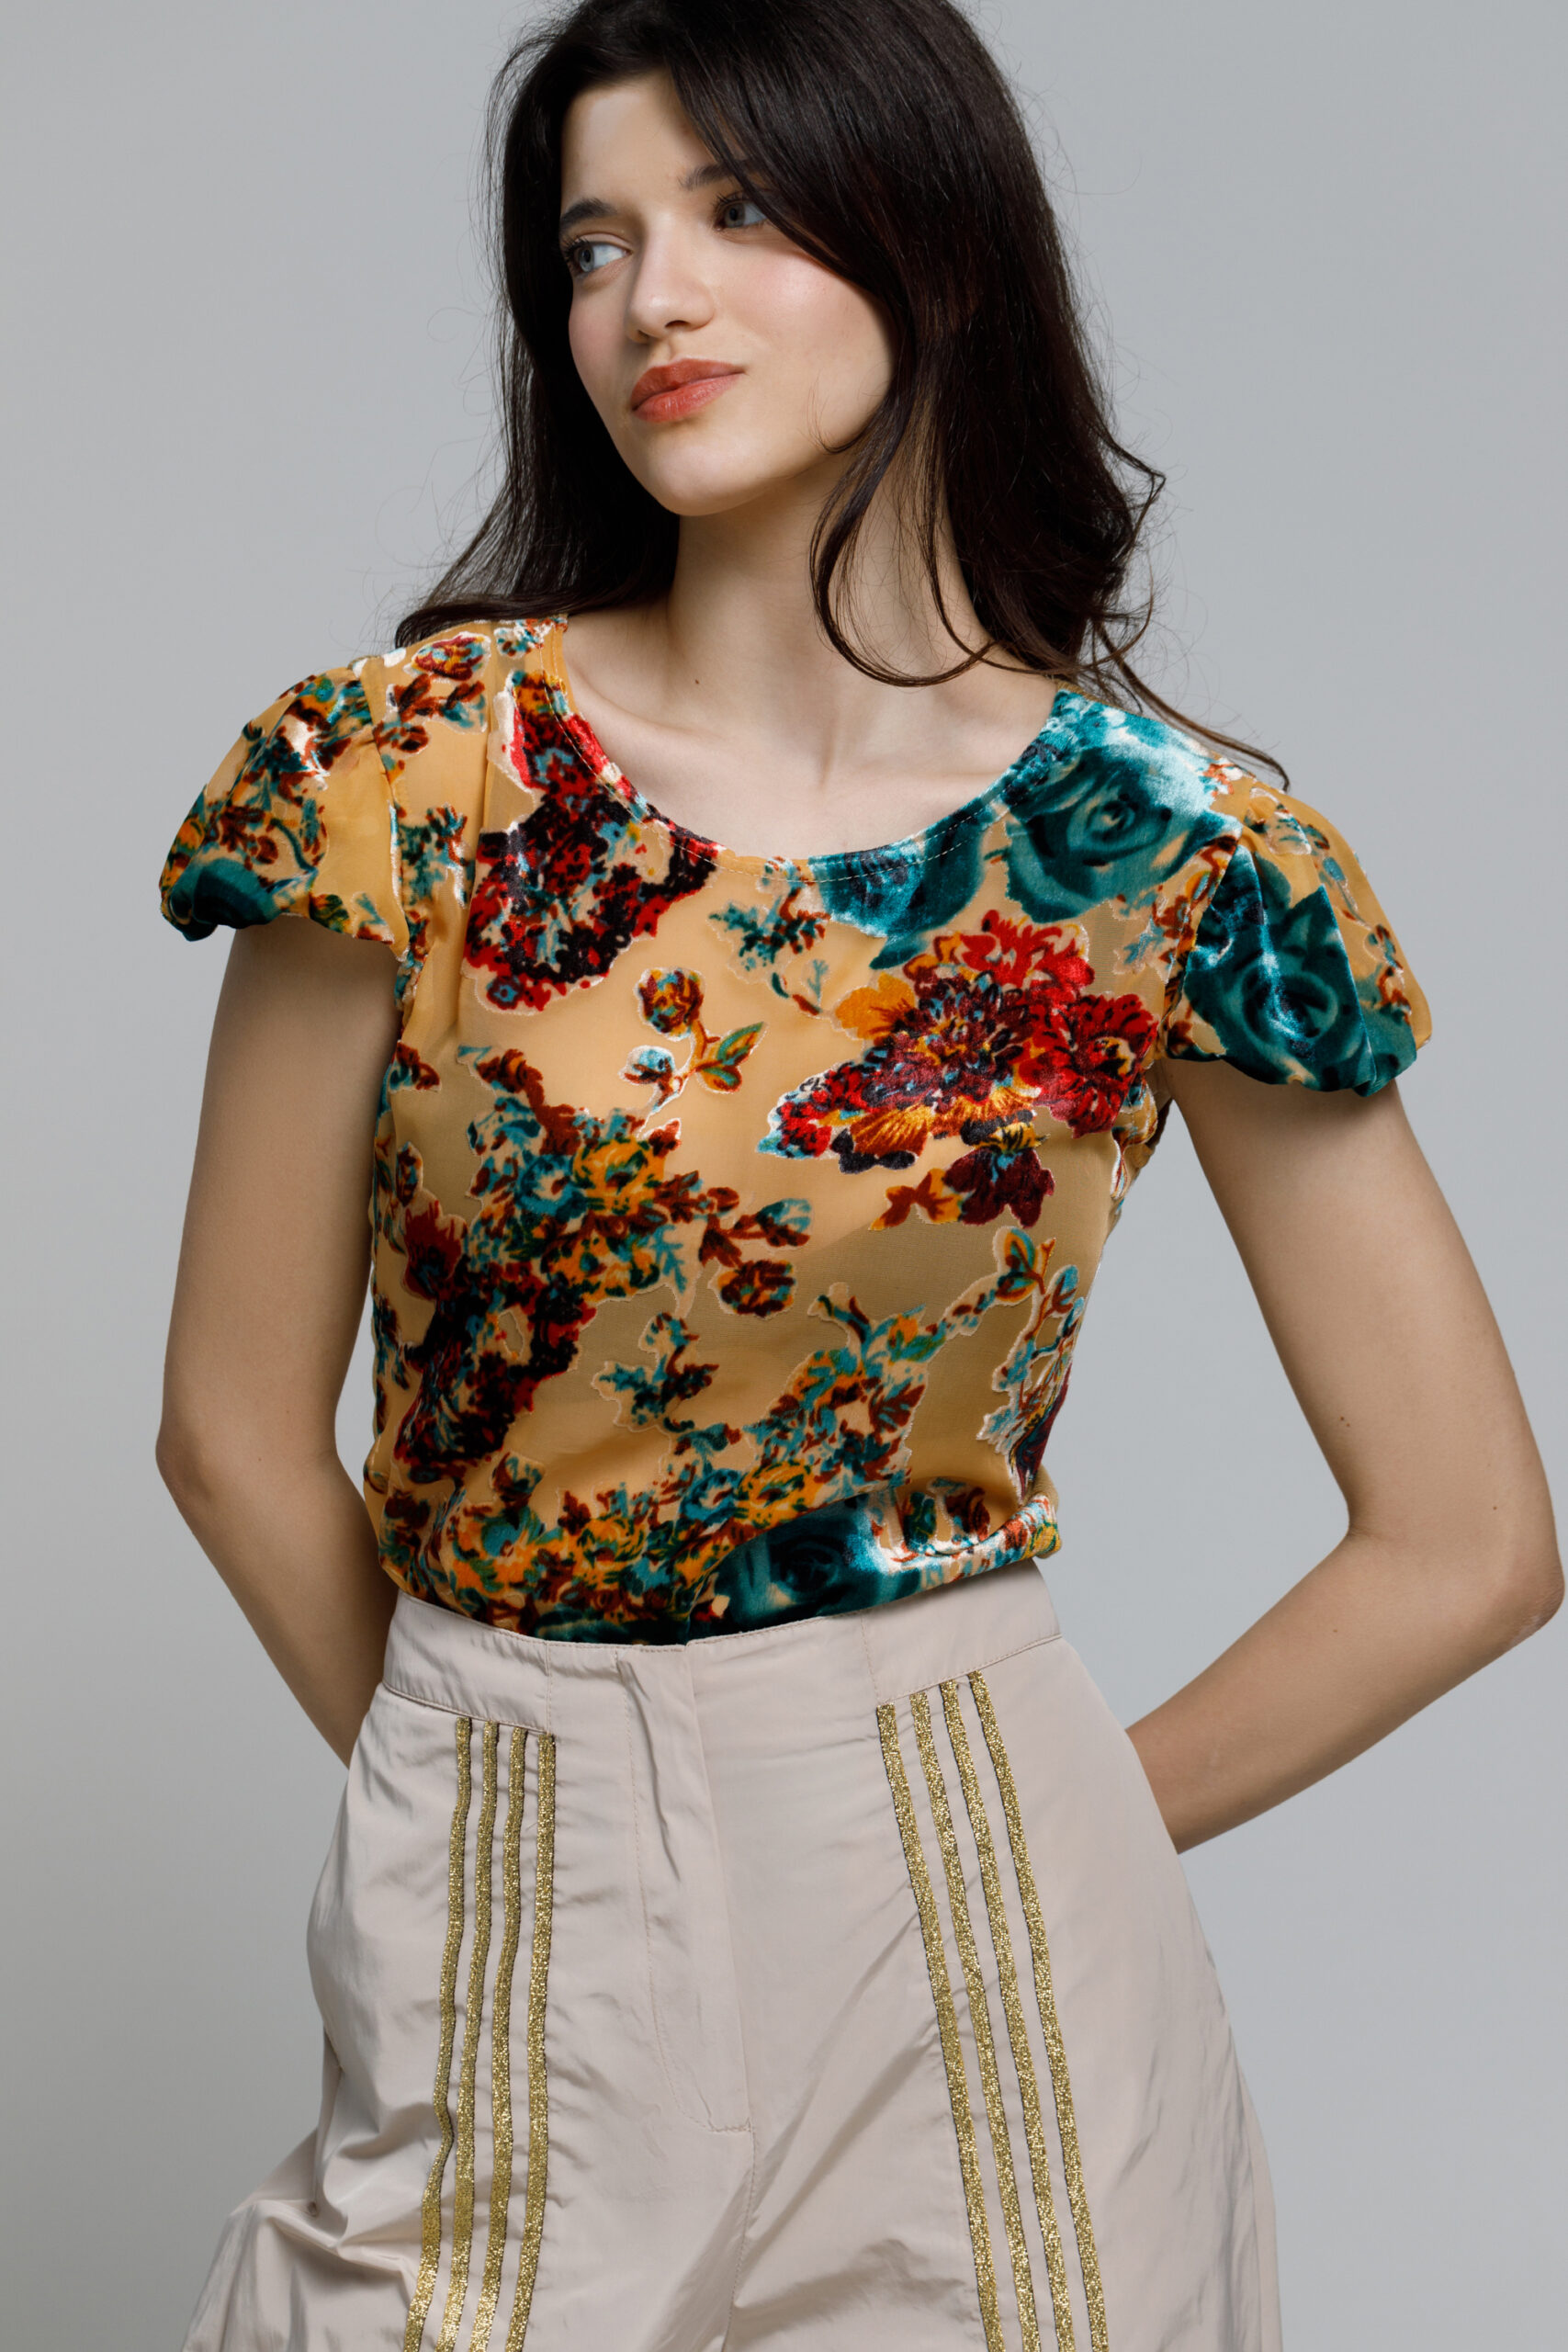 BELY2 blouse with velvet floral motifs. Natural fabrics, original design, handmade embroidery